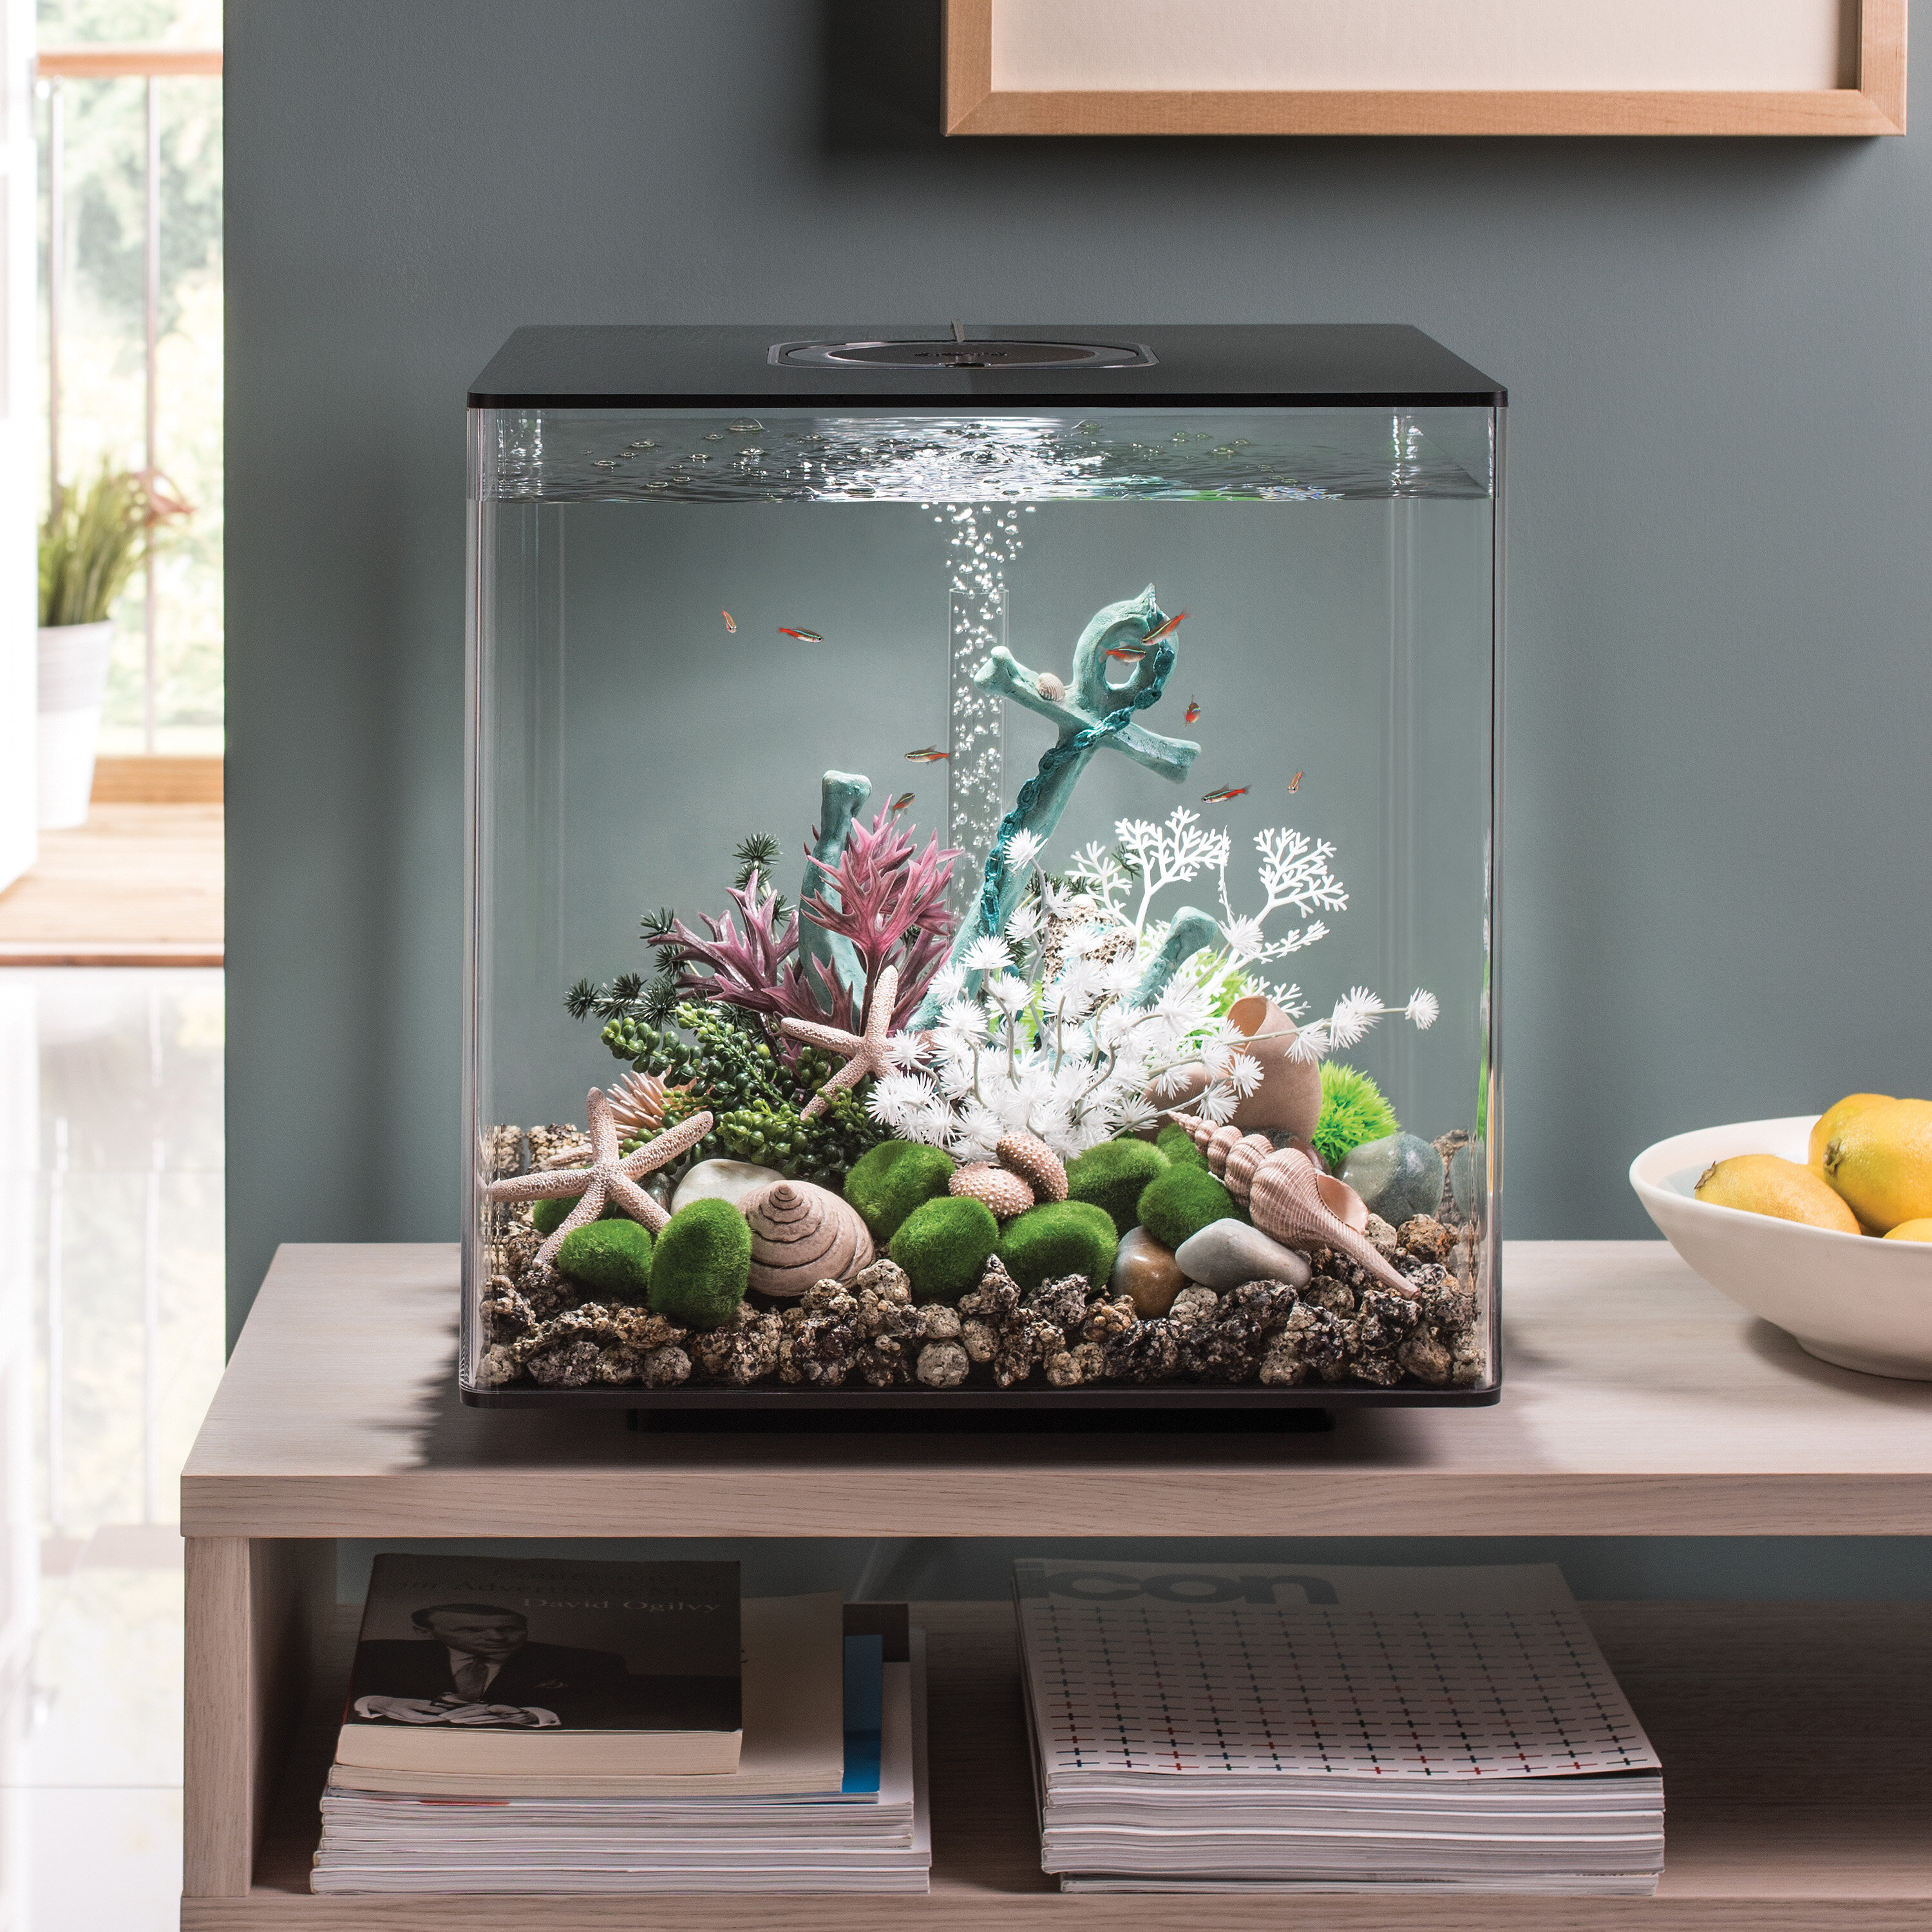 a small fish tank